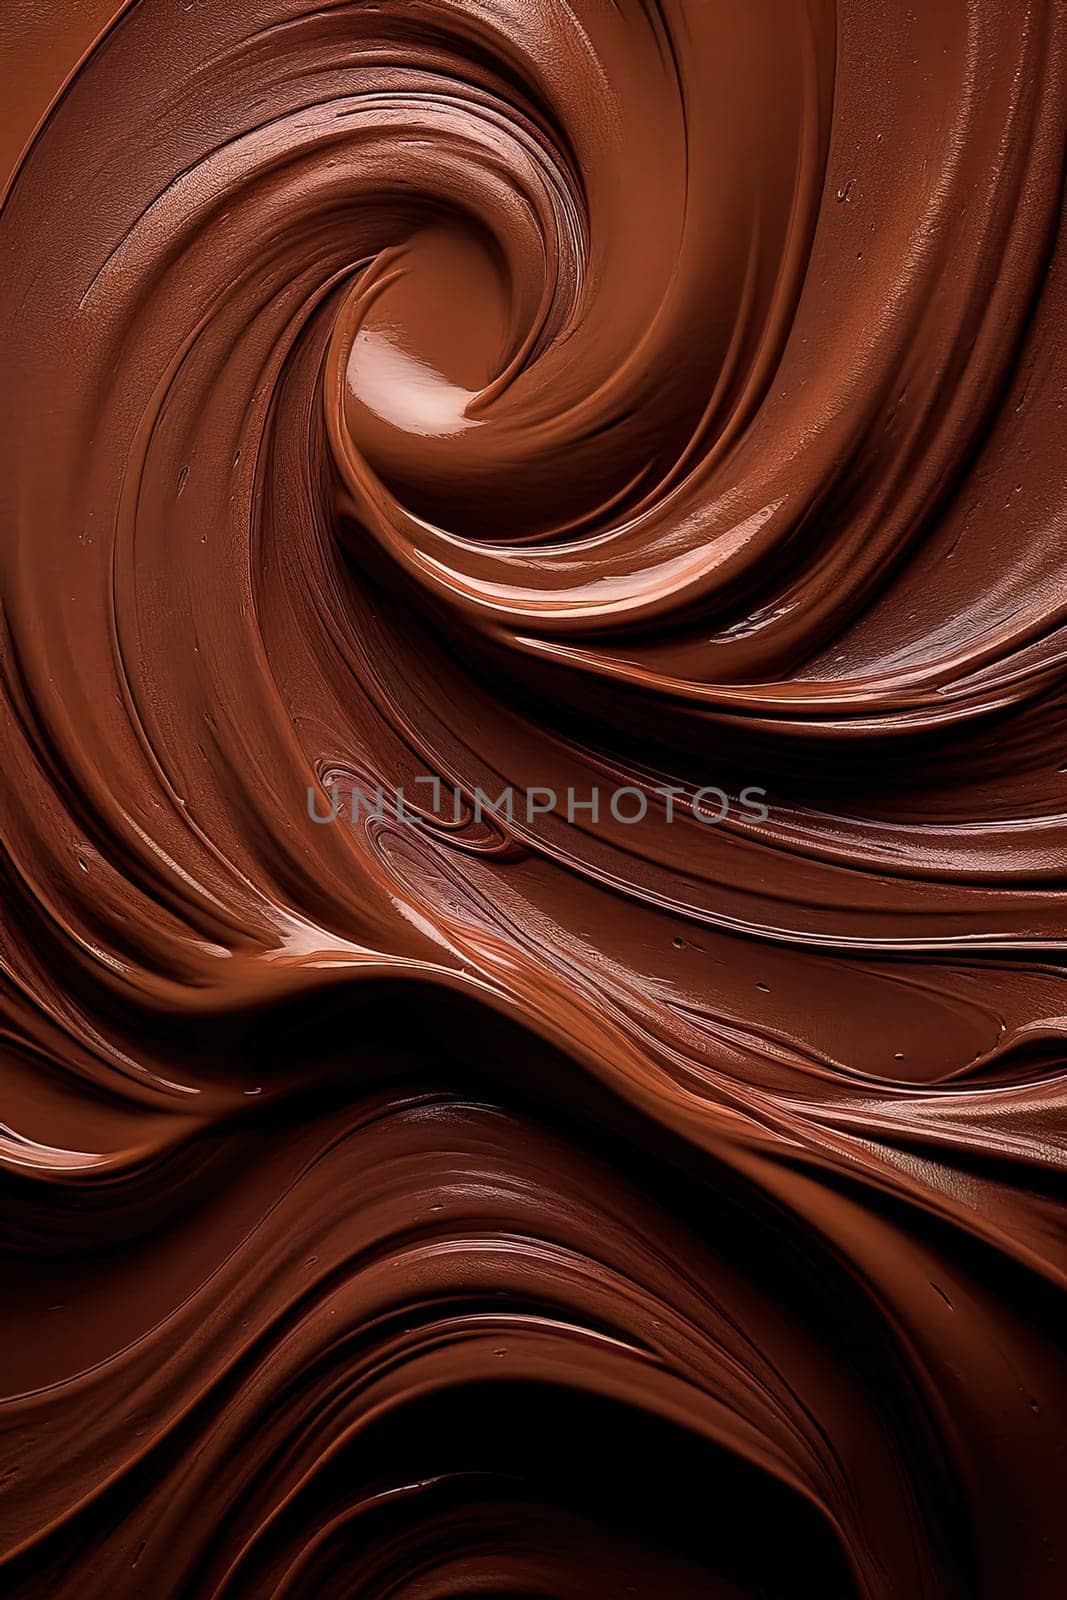 Hot chocolate swirl texture by Yurich32